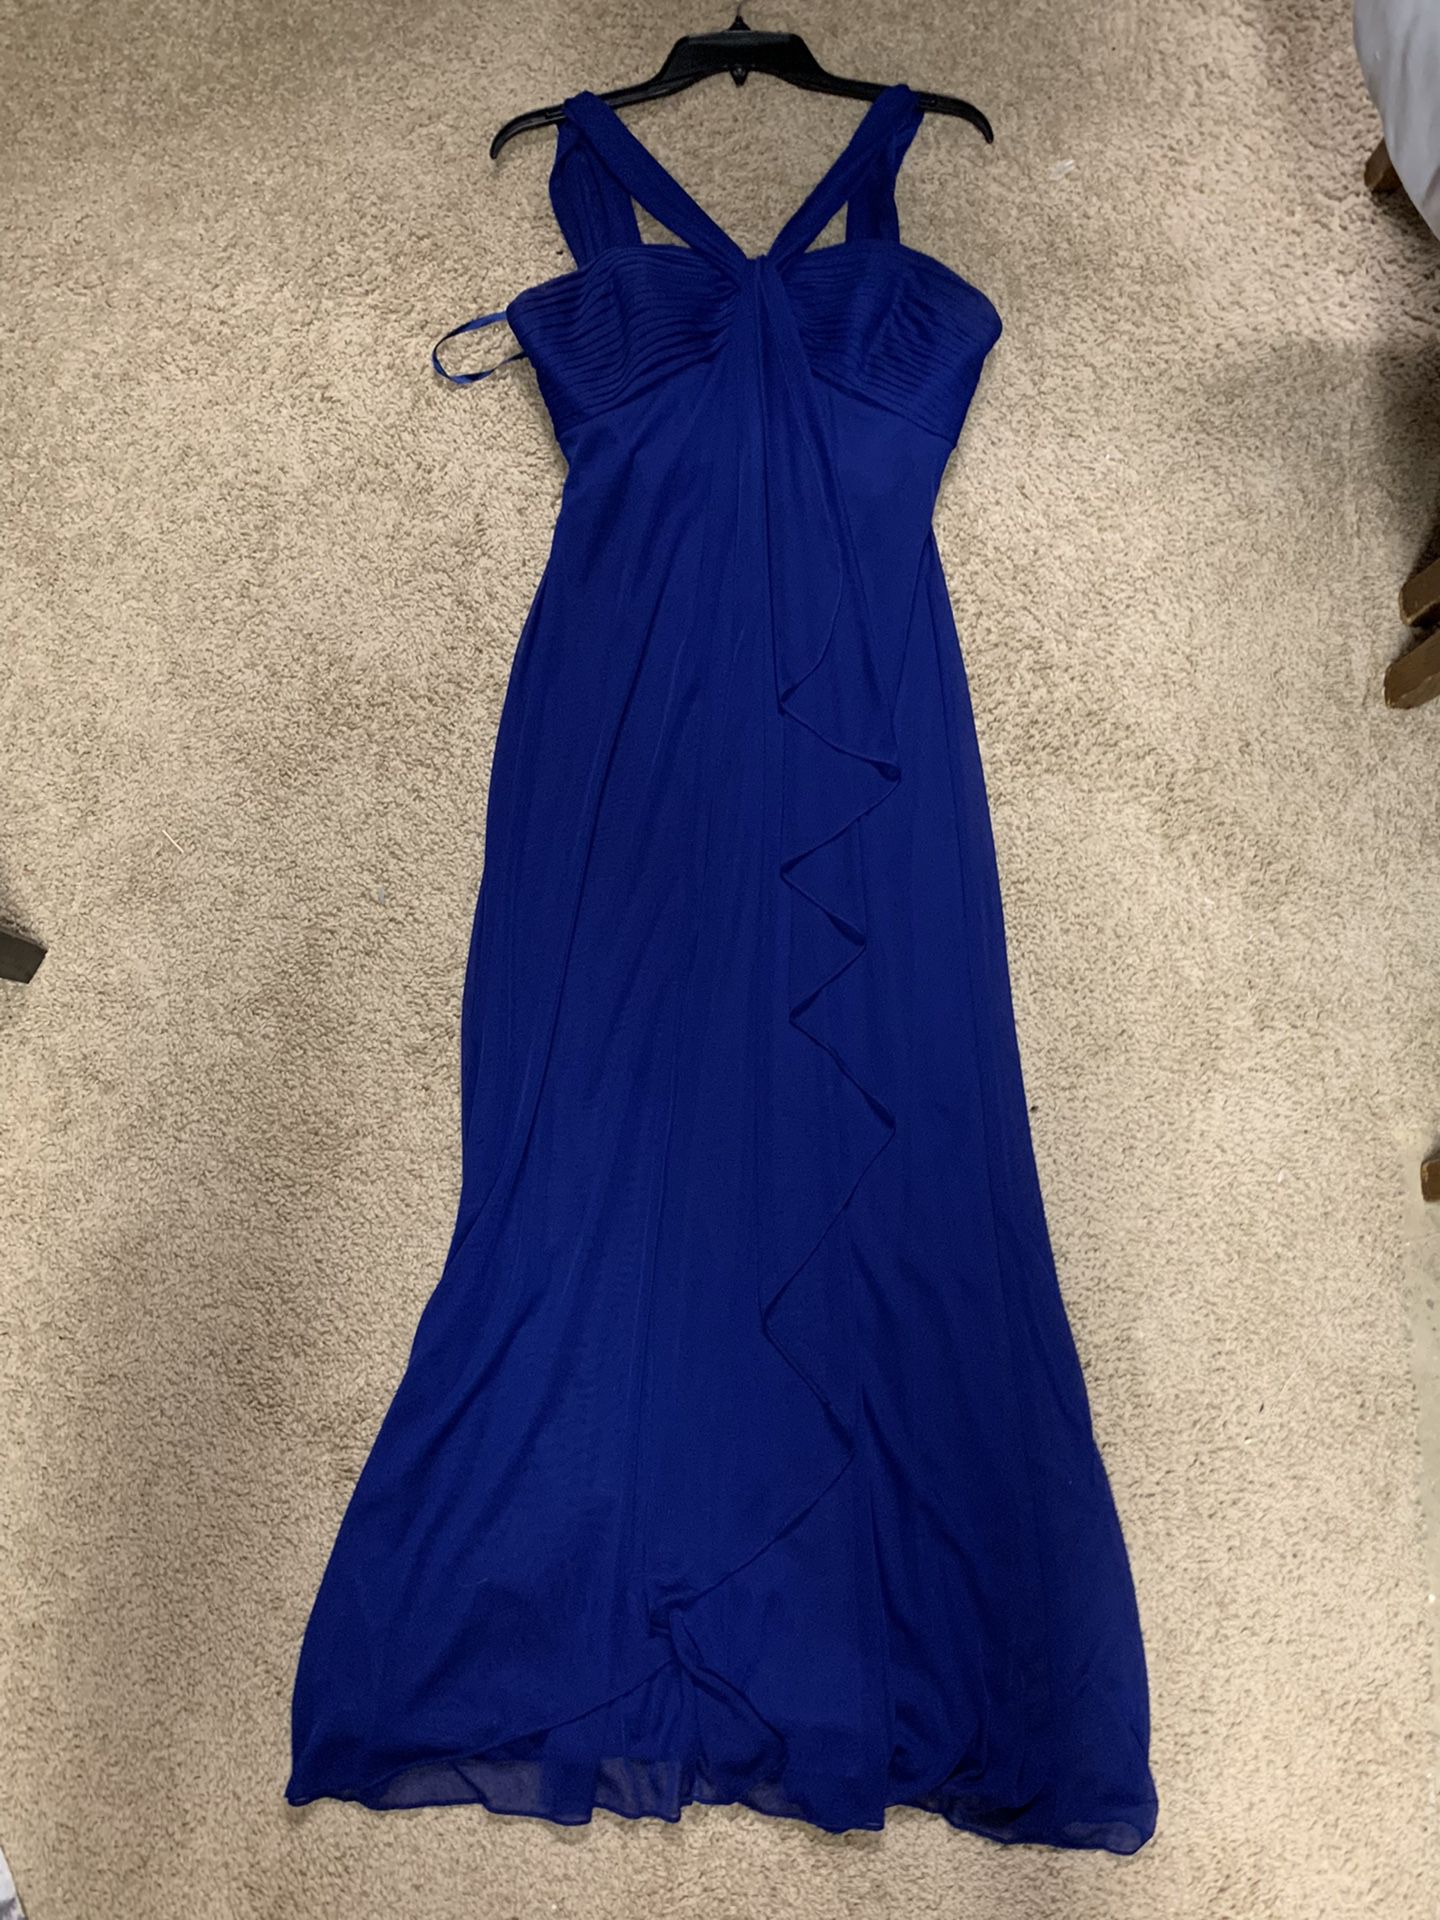 Long Dark Blue Dress